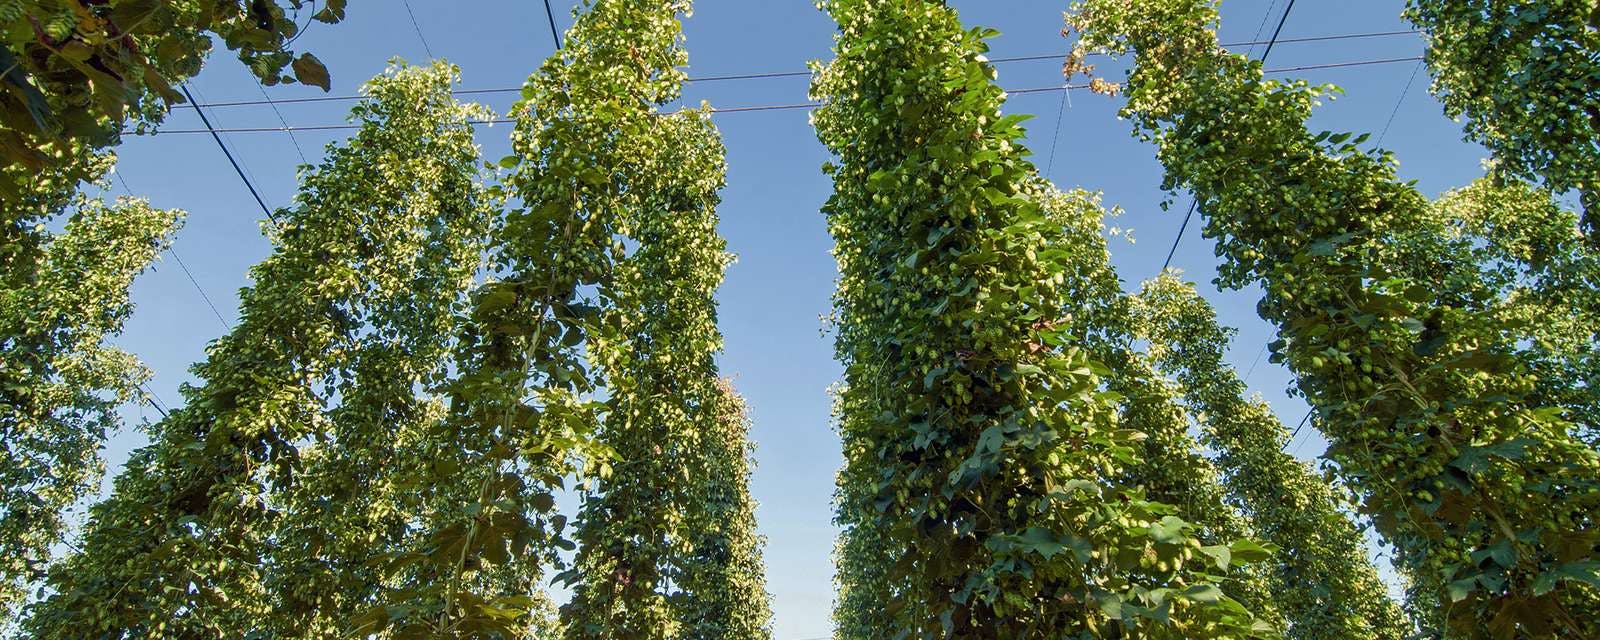 green-hops-plantation-2021-09-07-22-48-41-utc